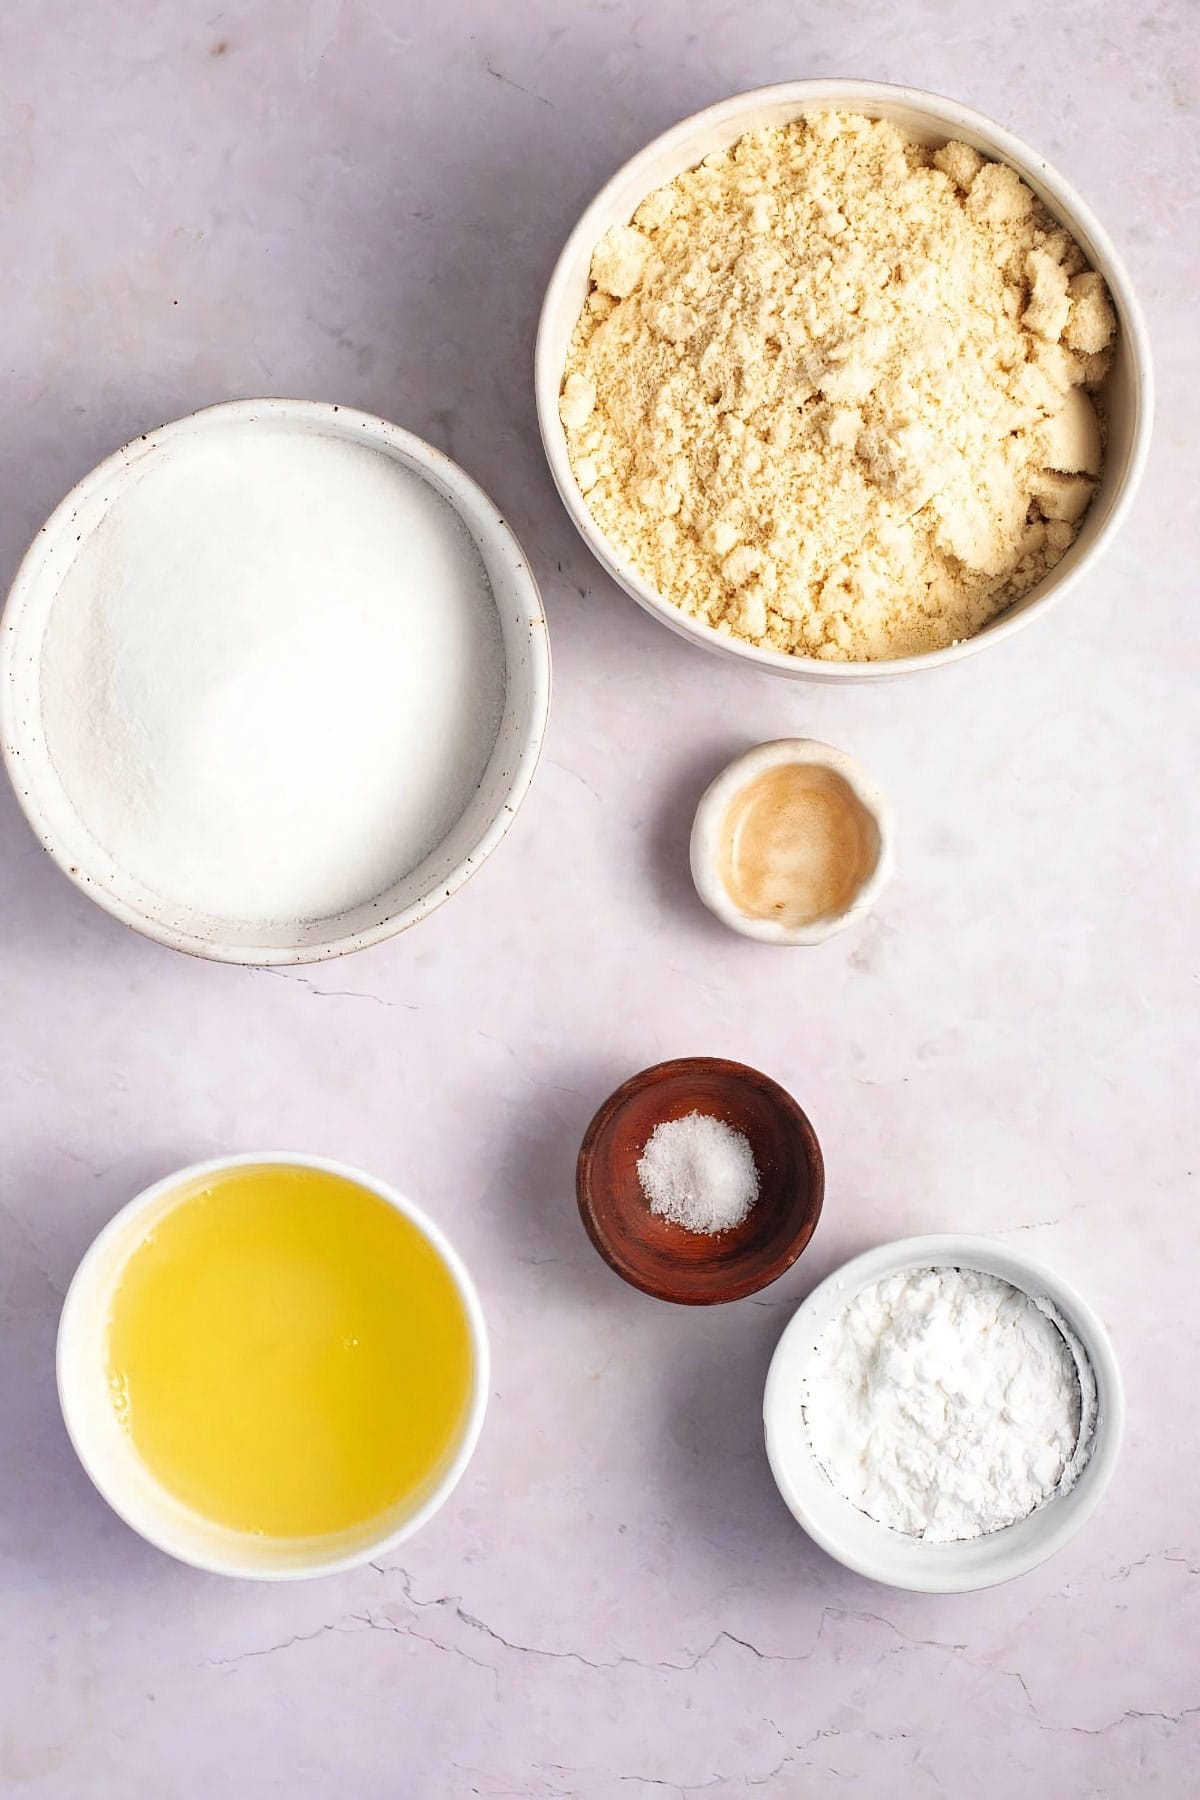 Amaretti Cookie Ingredients - Almond Flour, Granulated Sugar, Salt, Egg Whites, Almond Extract and Powdered Sugar